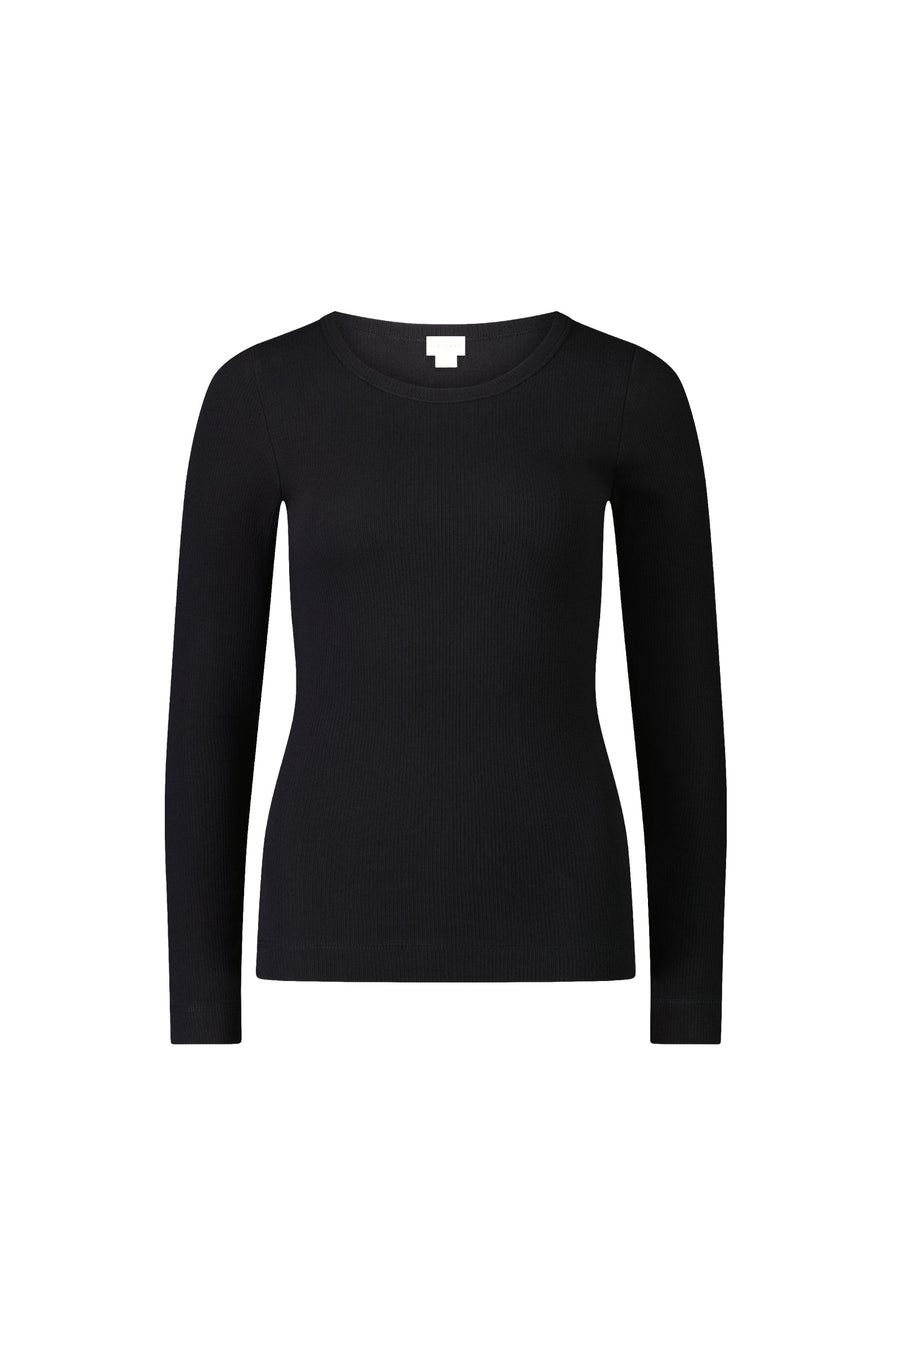 Organic Cotton Fine Rib Womens Long Sleeve Top - Black